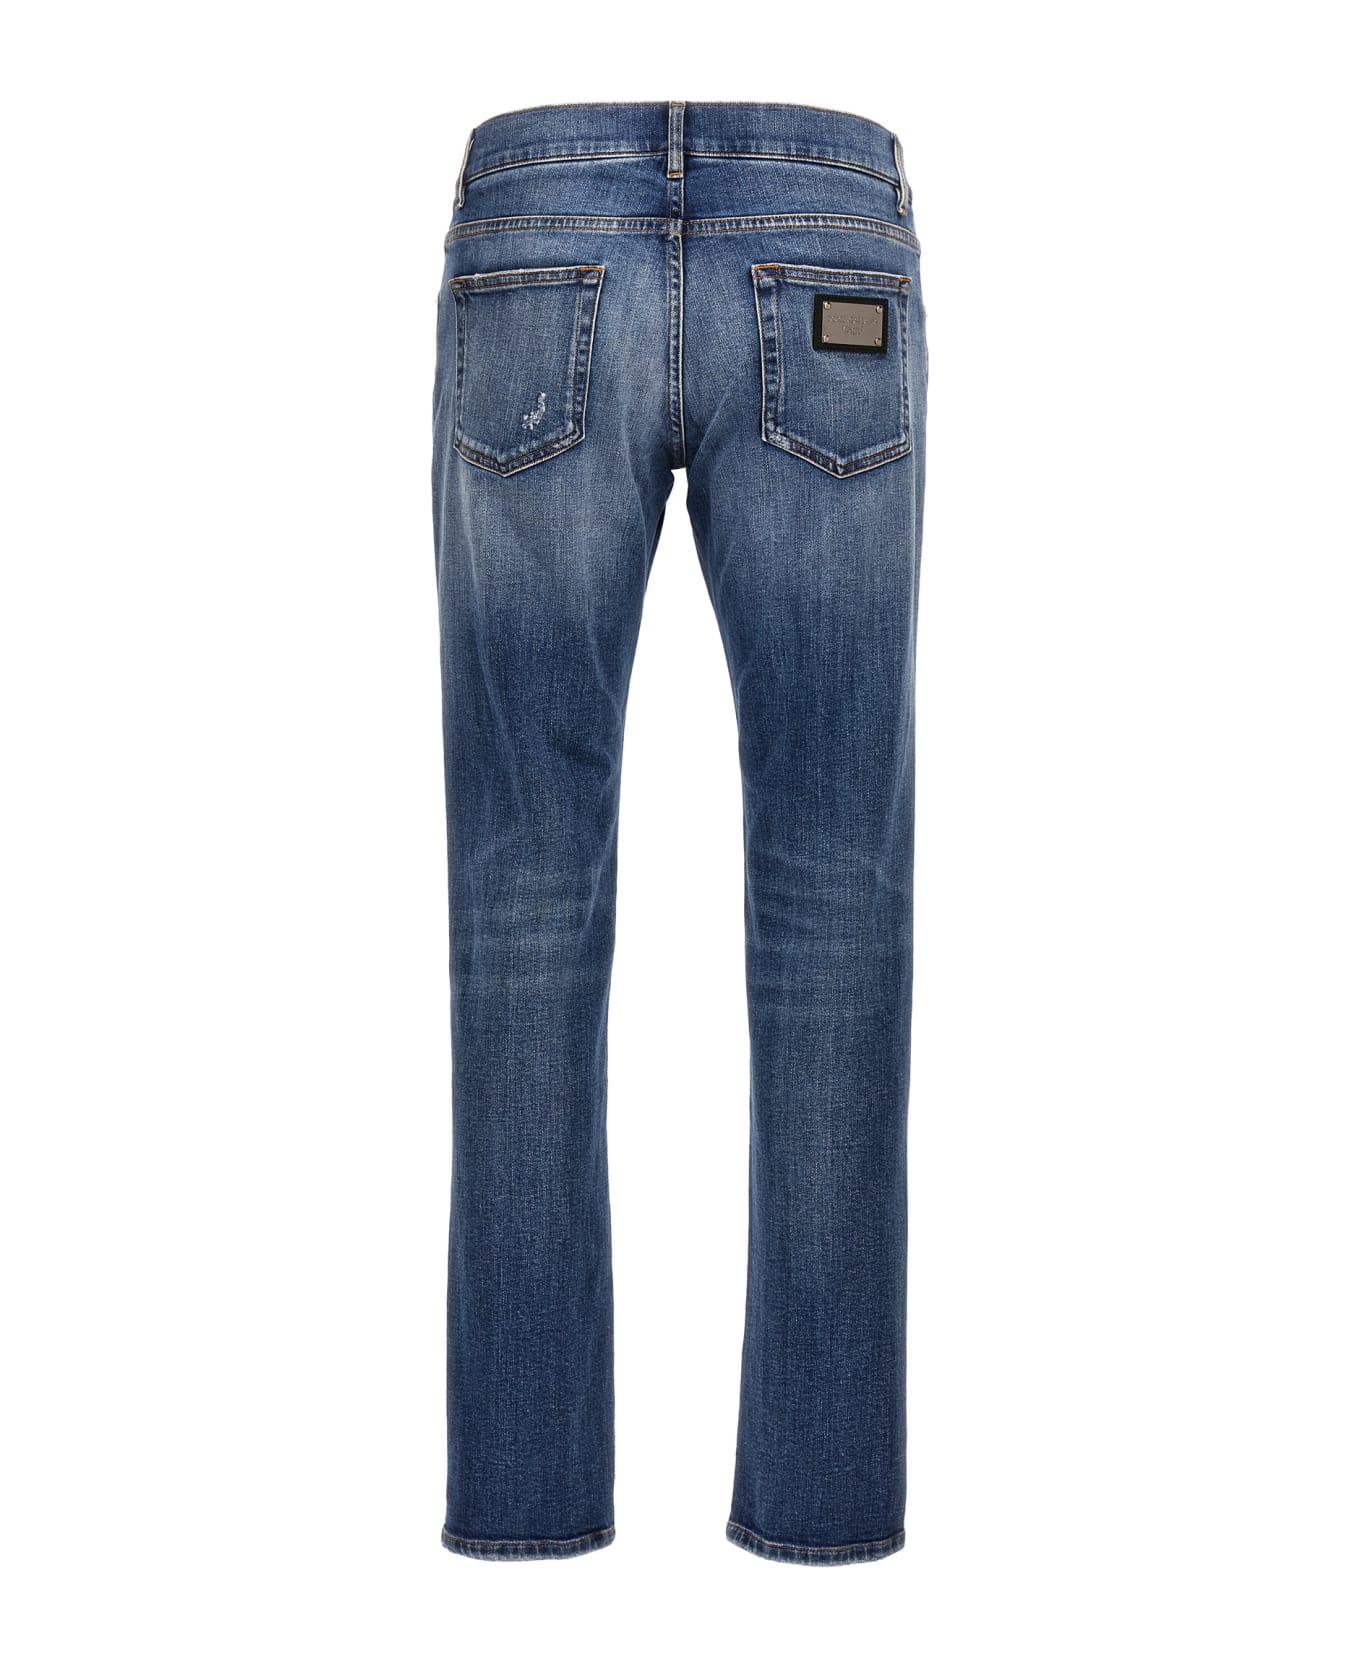 Dolce & Gabbana Classic 5 Pockets Denim Jeans - Denim